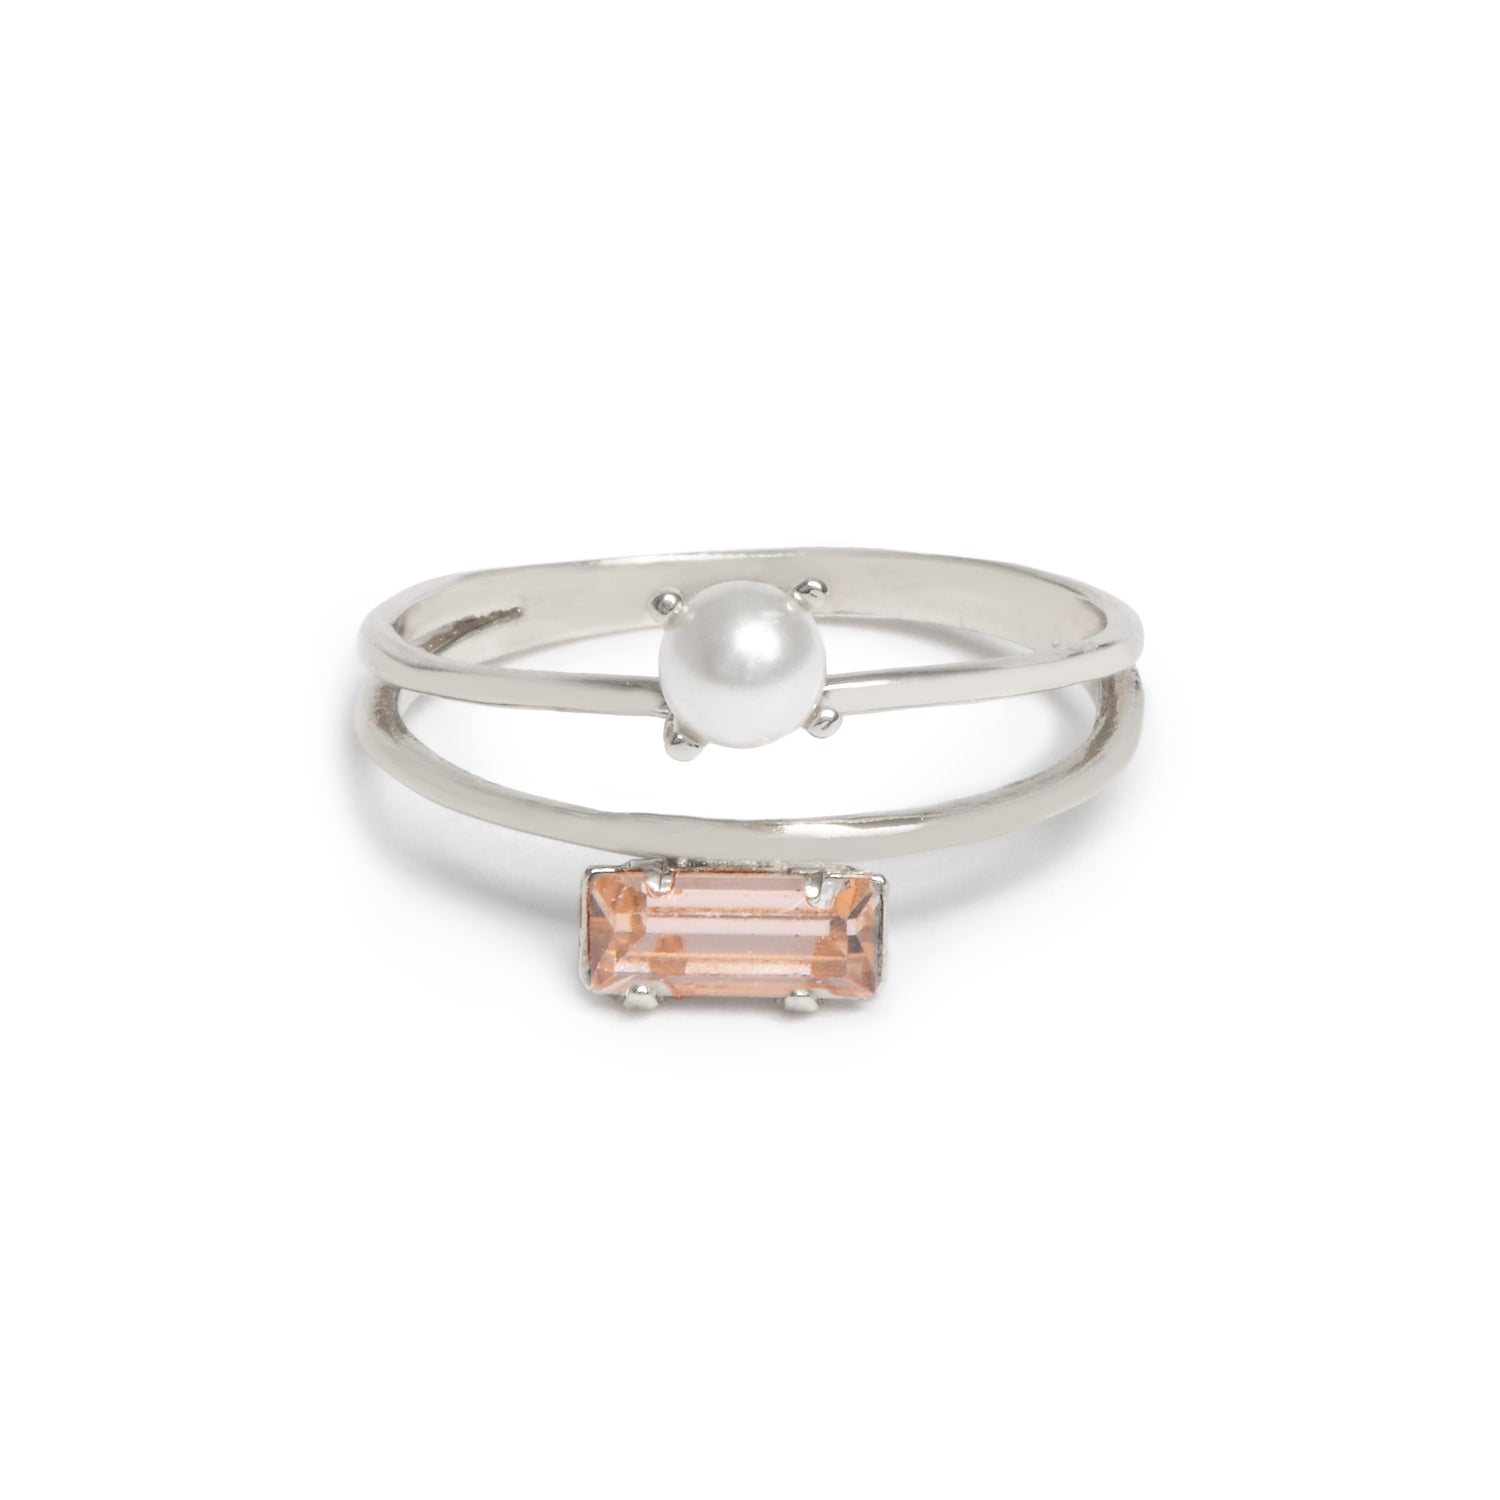 Monroe Duet Ring - Peach Crystal - Bing Bang Jewelry NYC